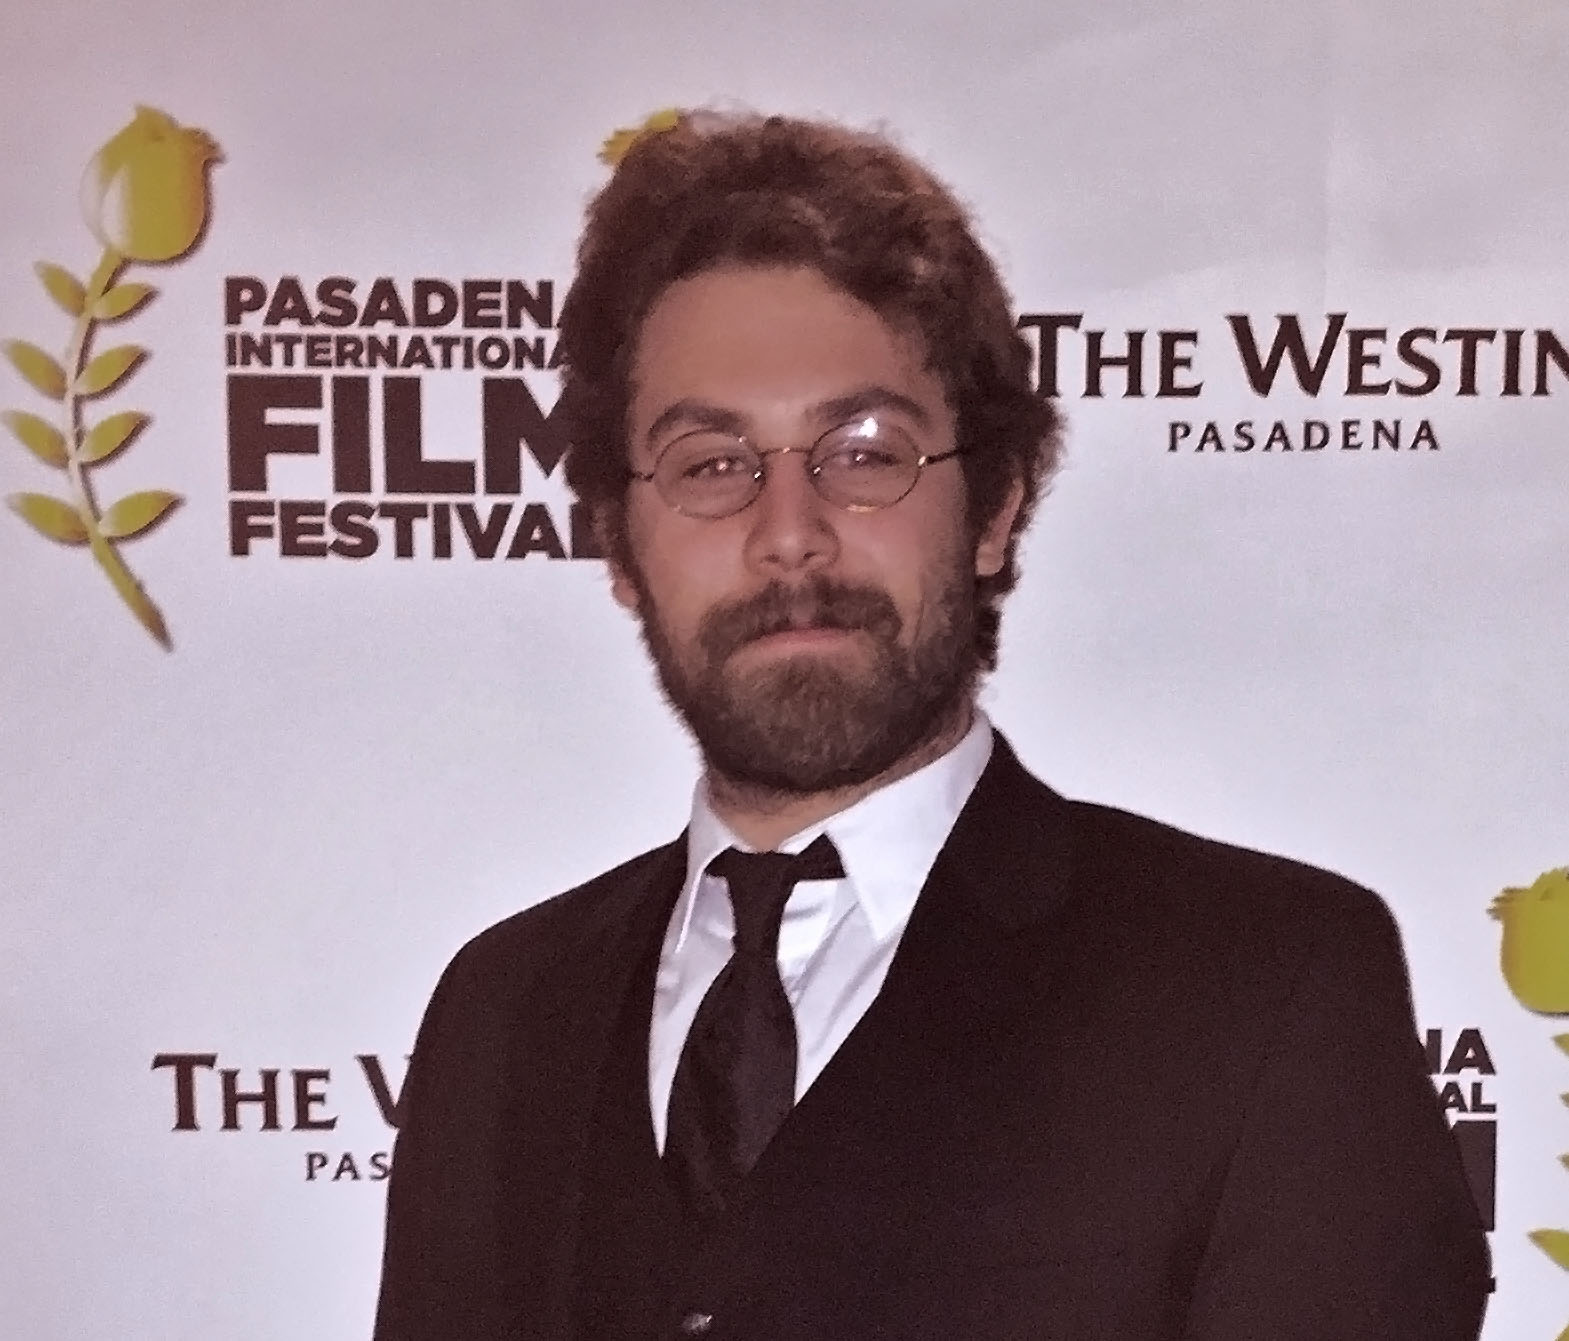 Juan Pesquera at The Pasadena International Film Festival